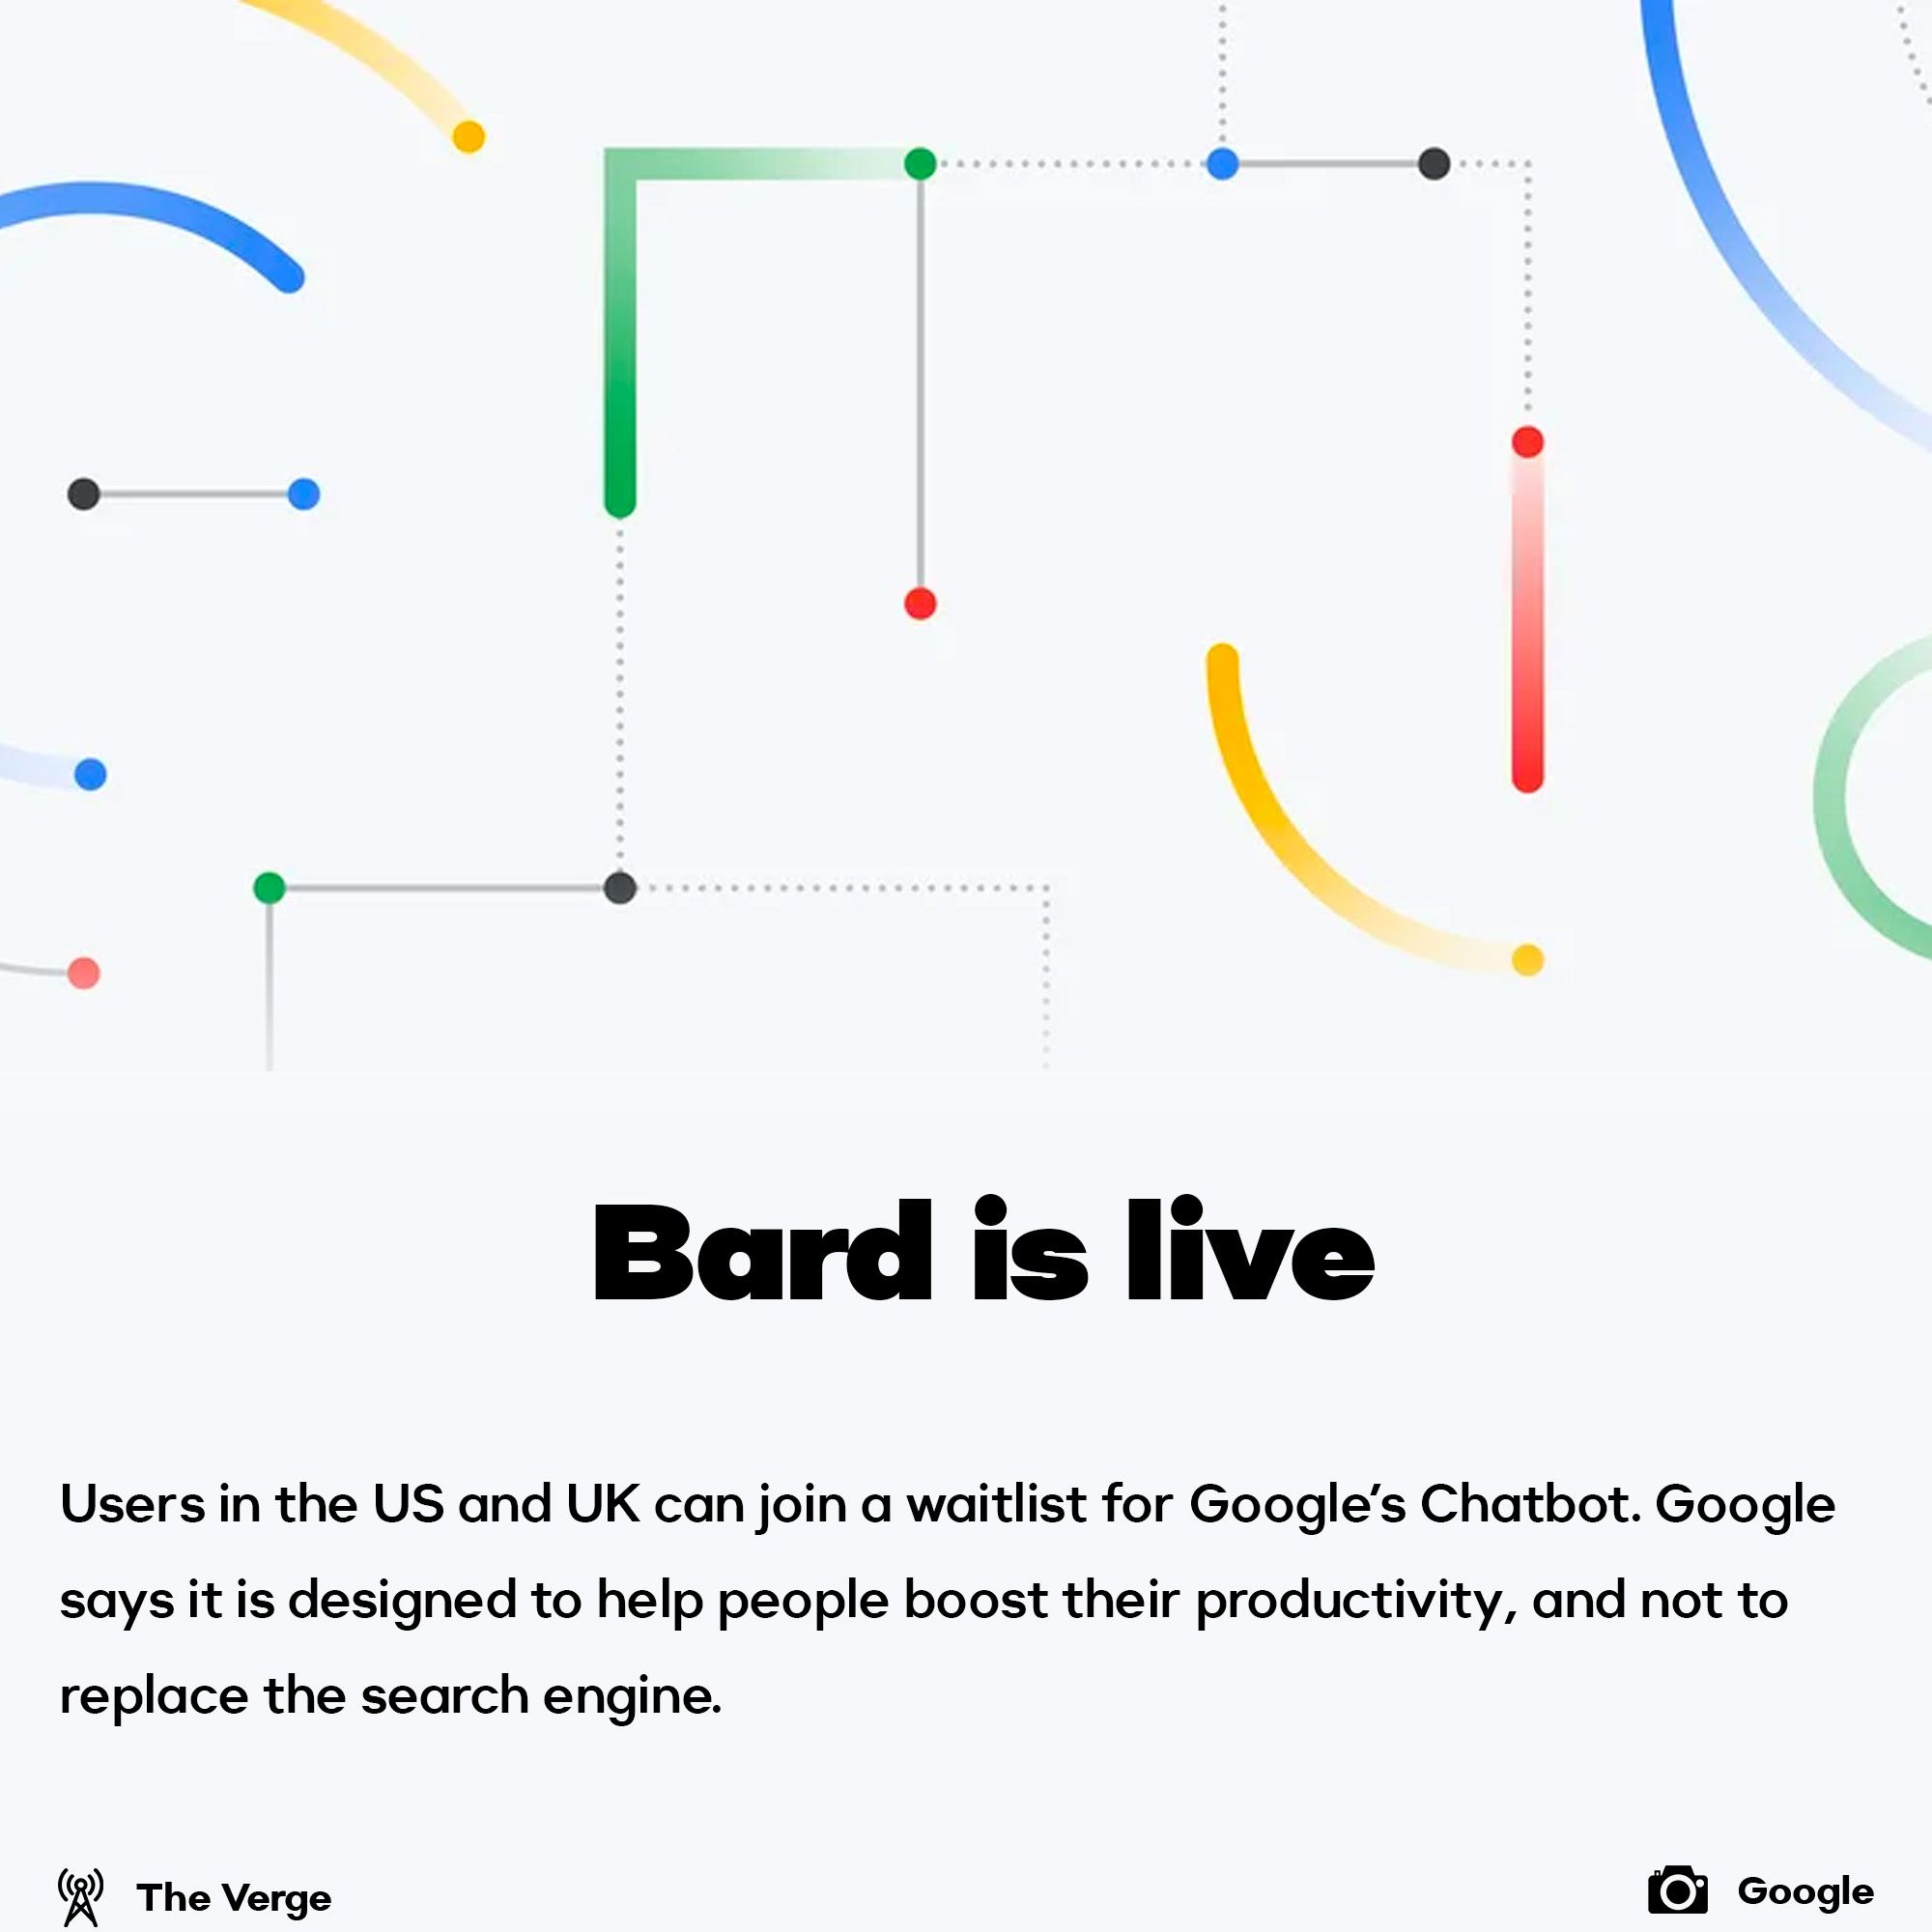 Google Bard is live